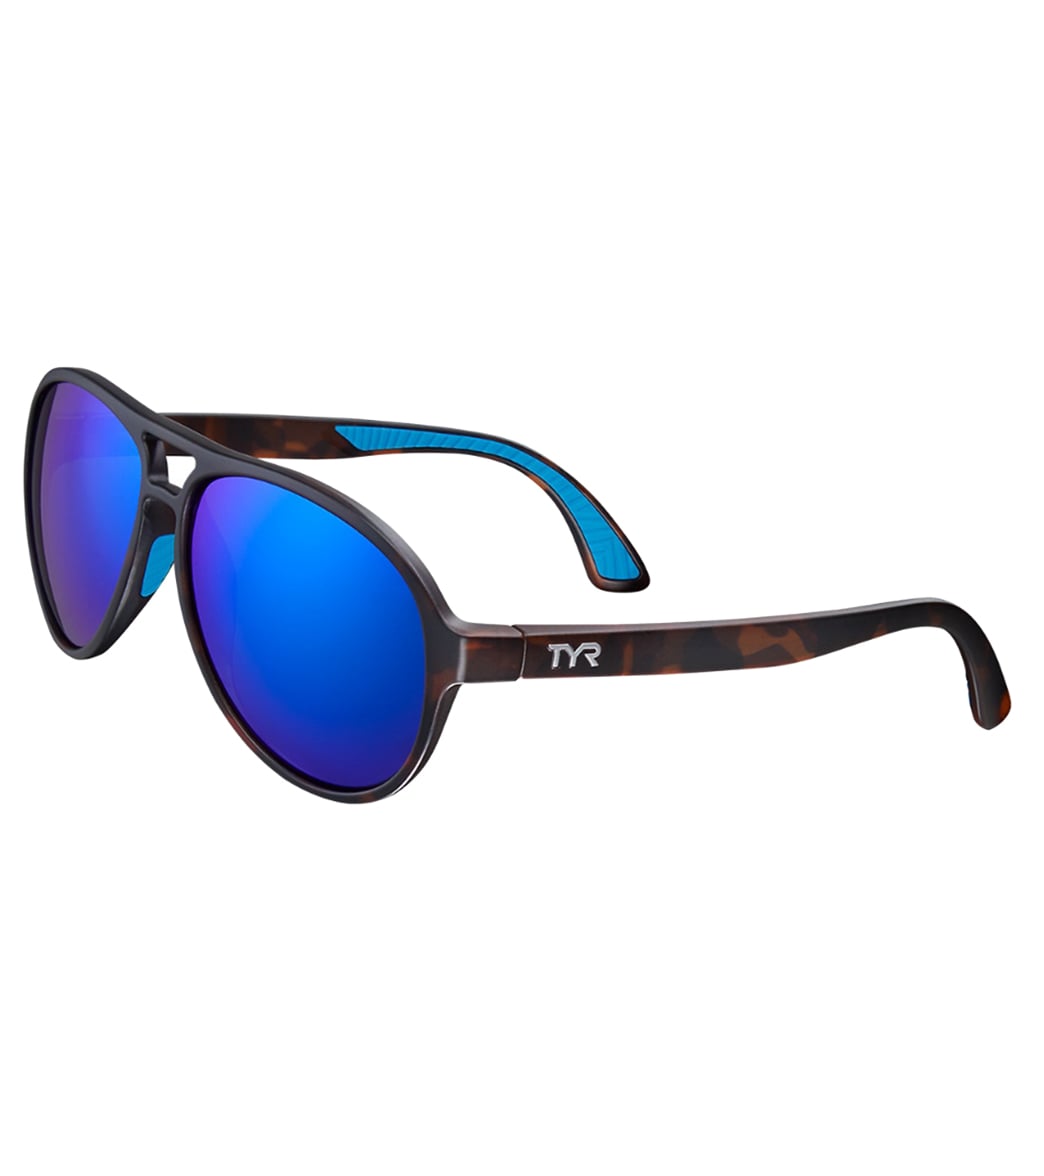 TYR Men's Newland Aviator Small Sunglasses - Blue/Tort - Swimoutlet.com